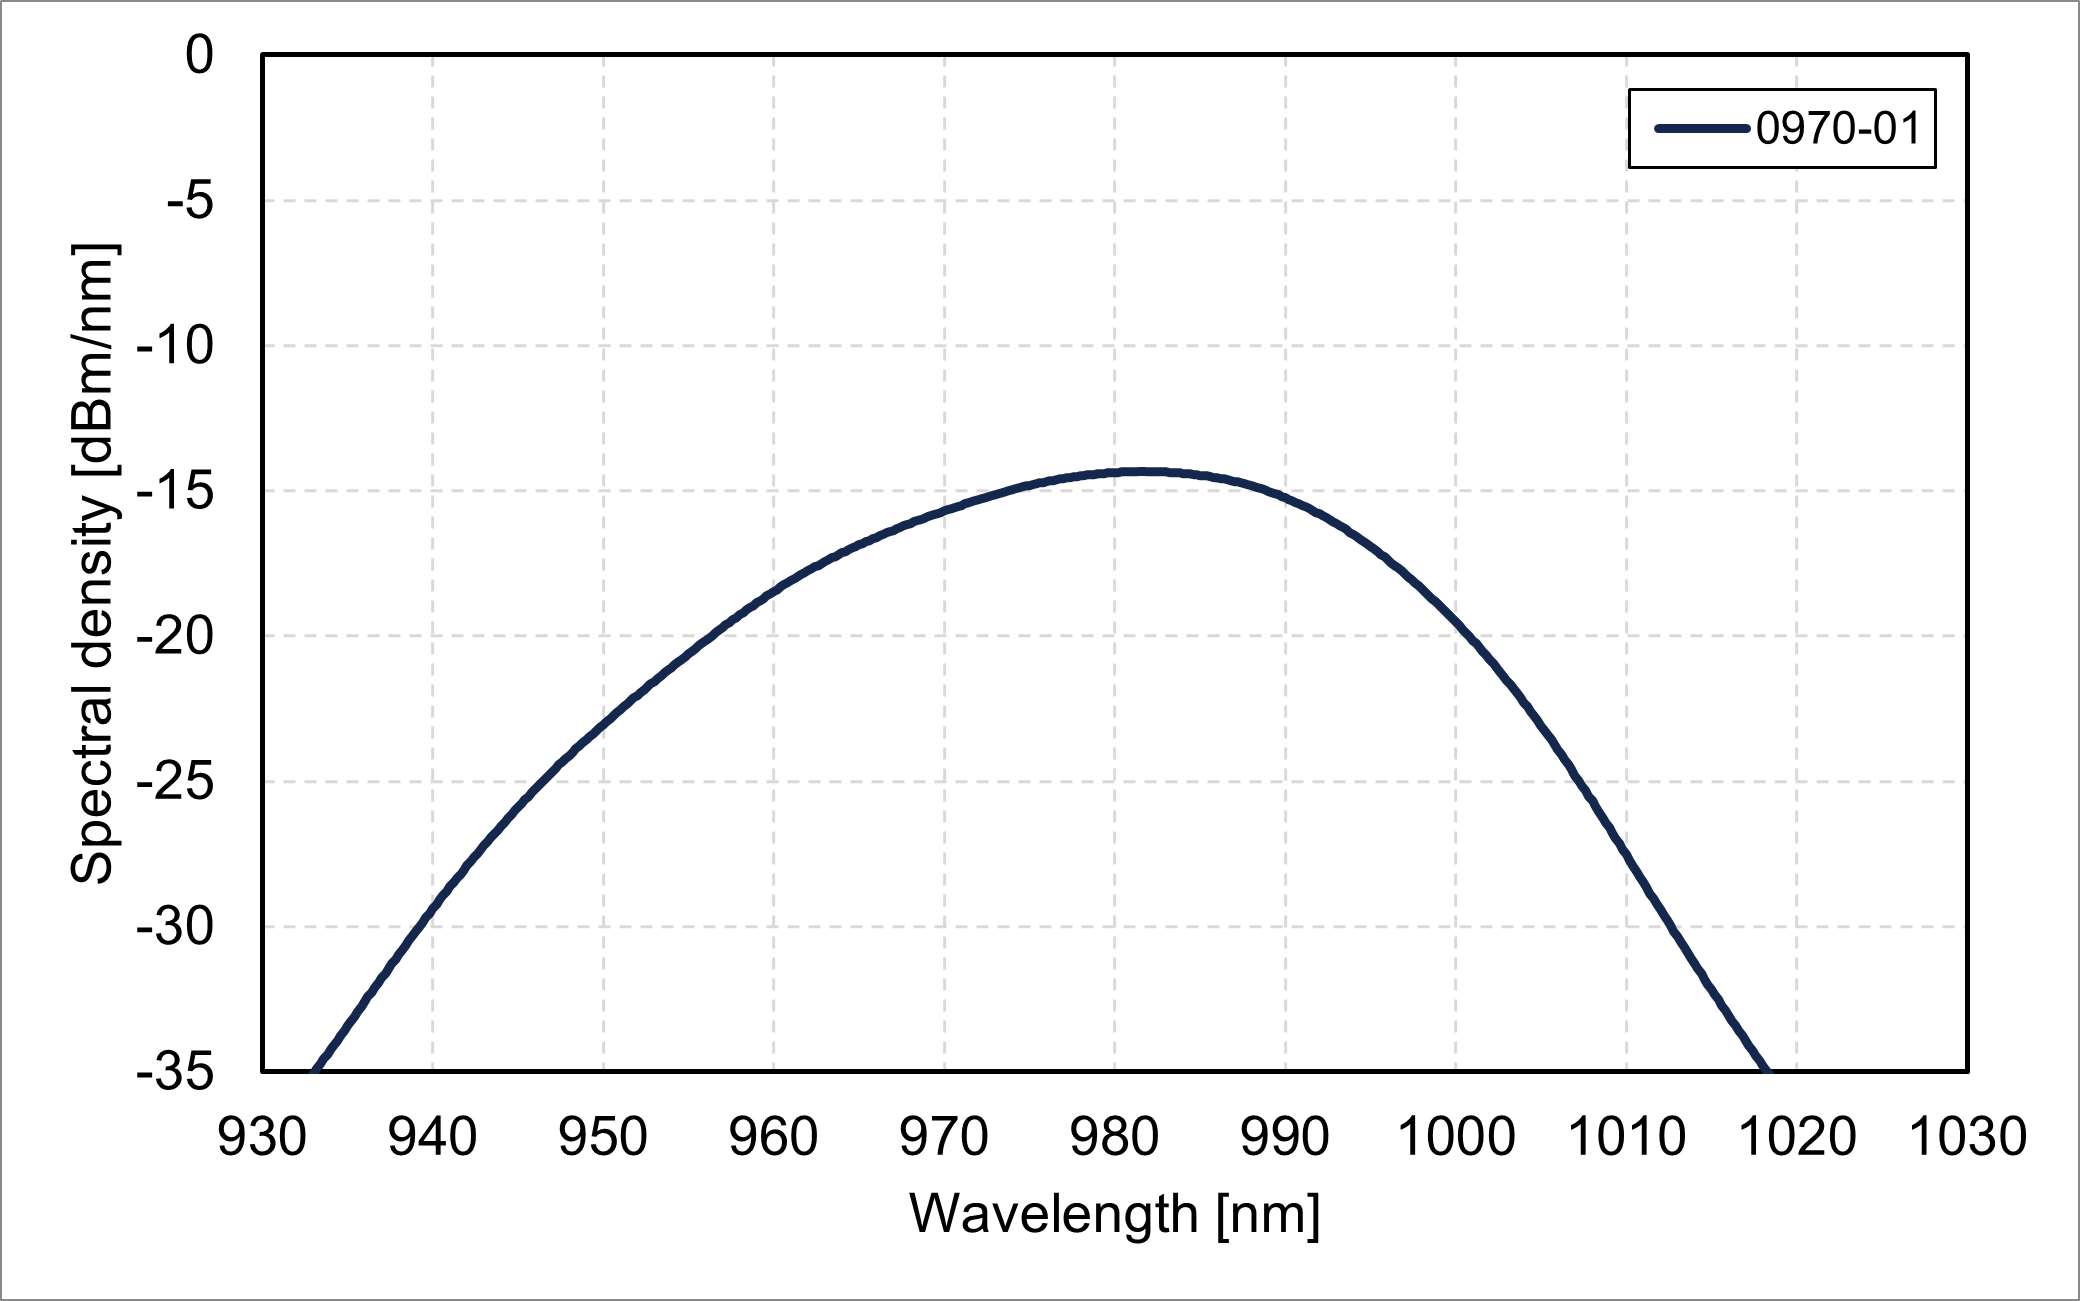 Spectral density vs. wavelength (0970-01)